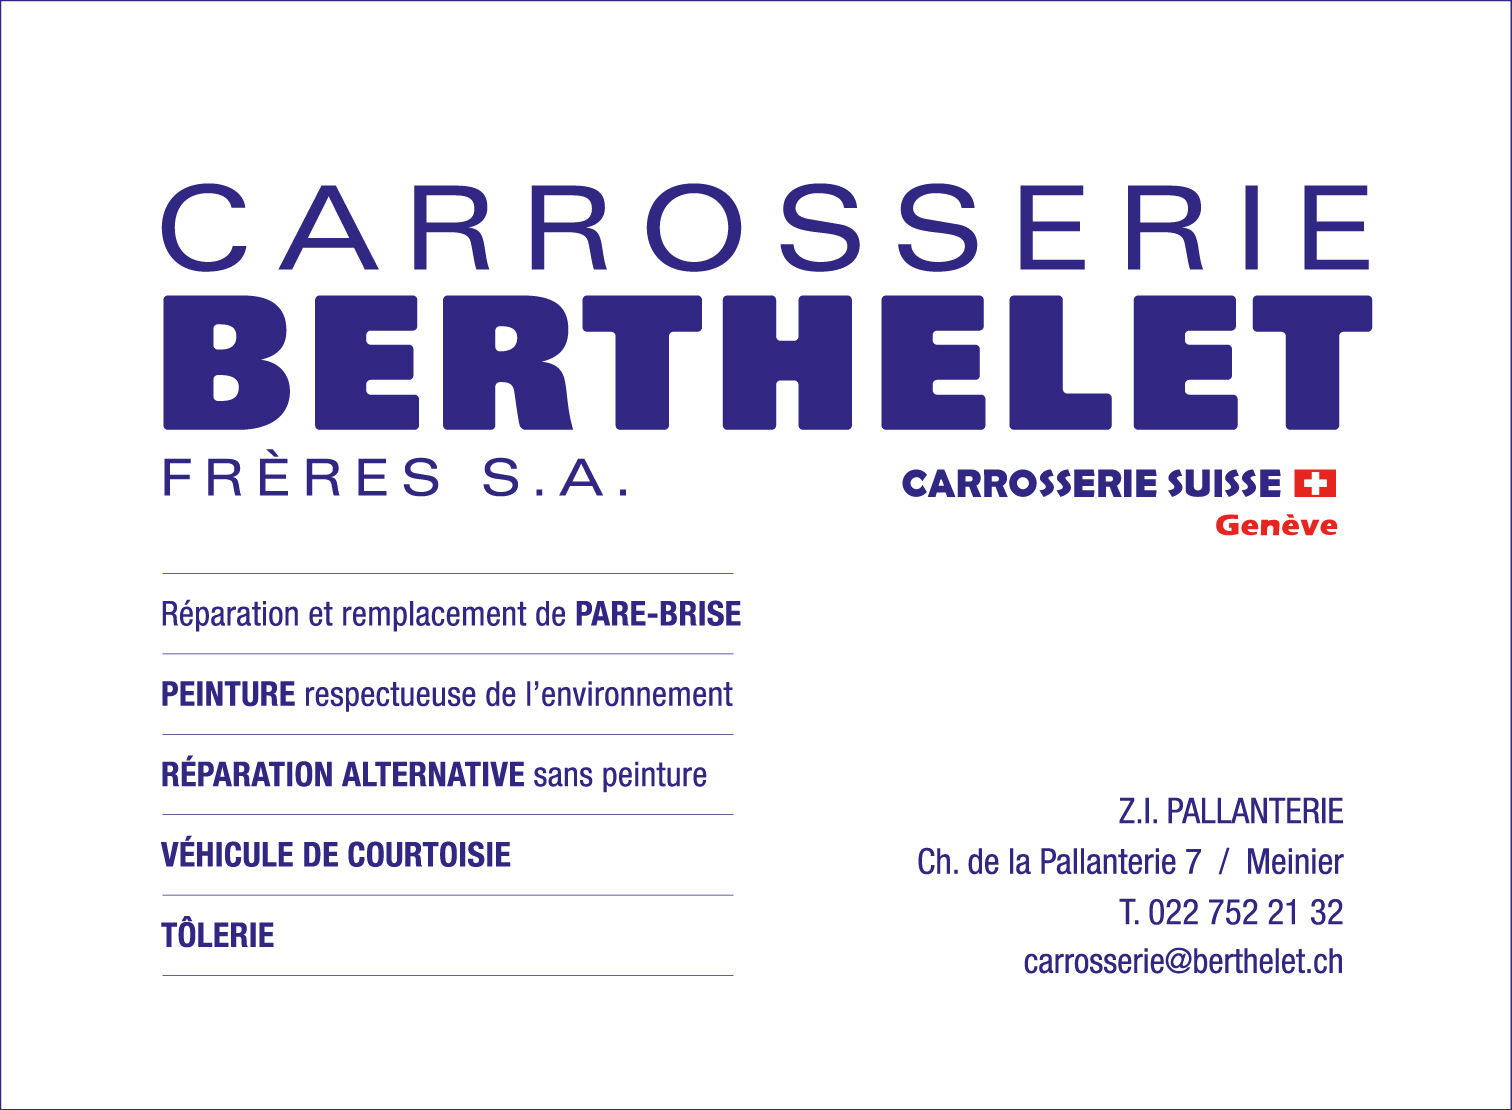 Carrosserie Berthelet Frères S.A.